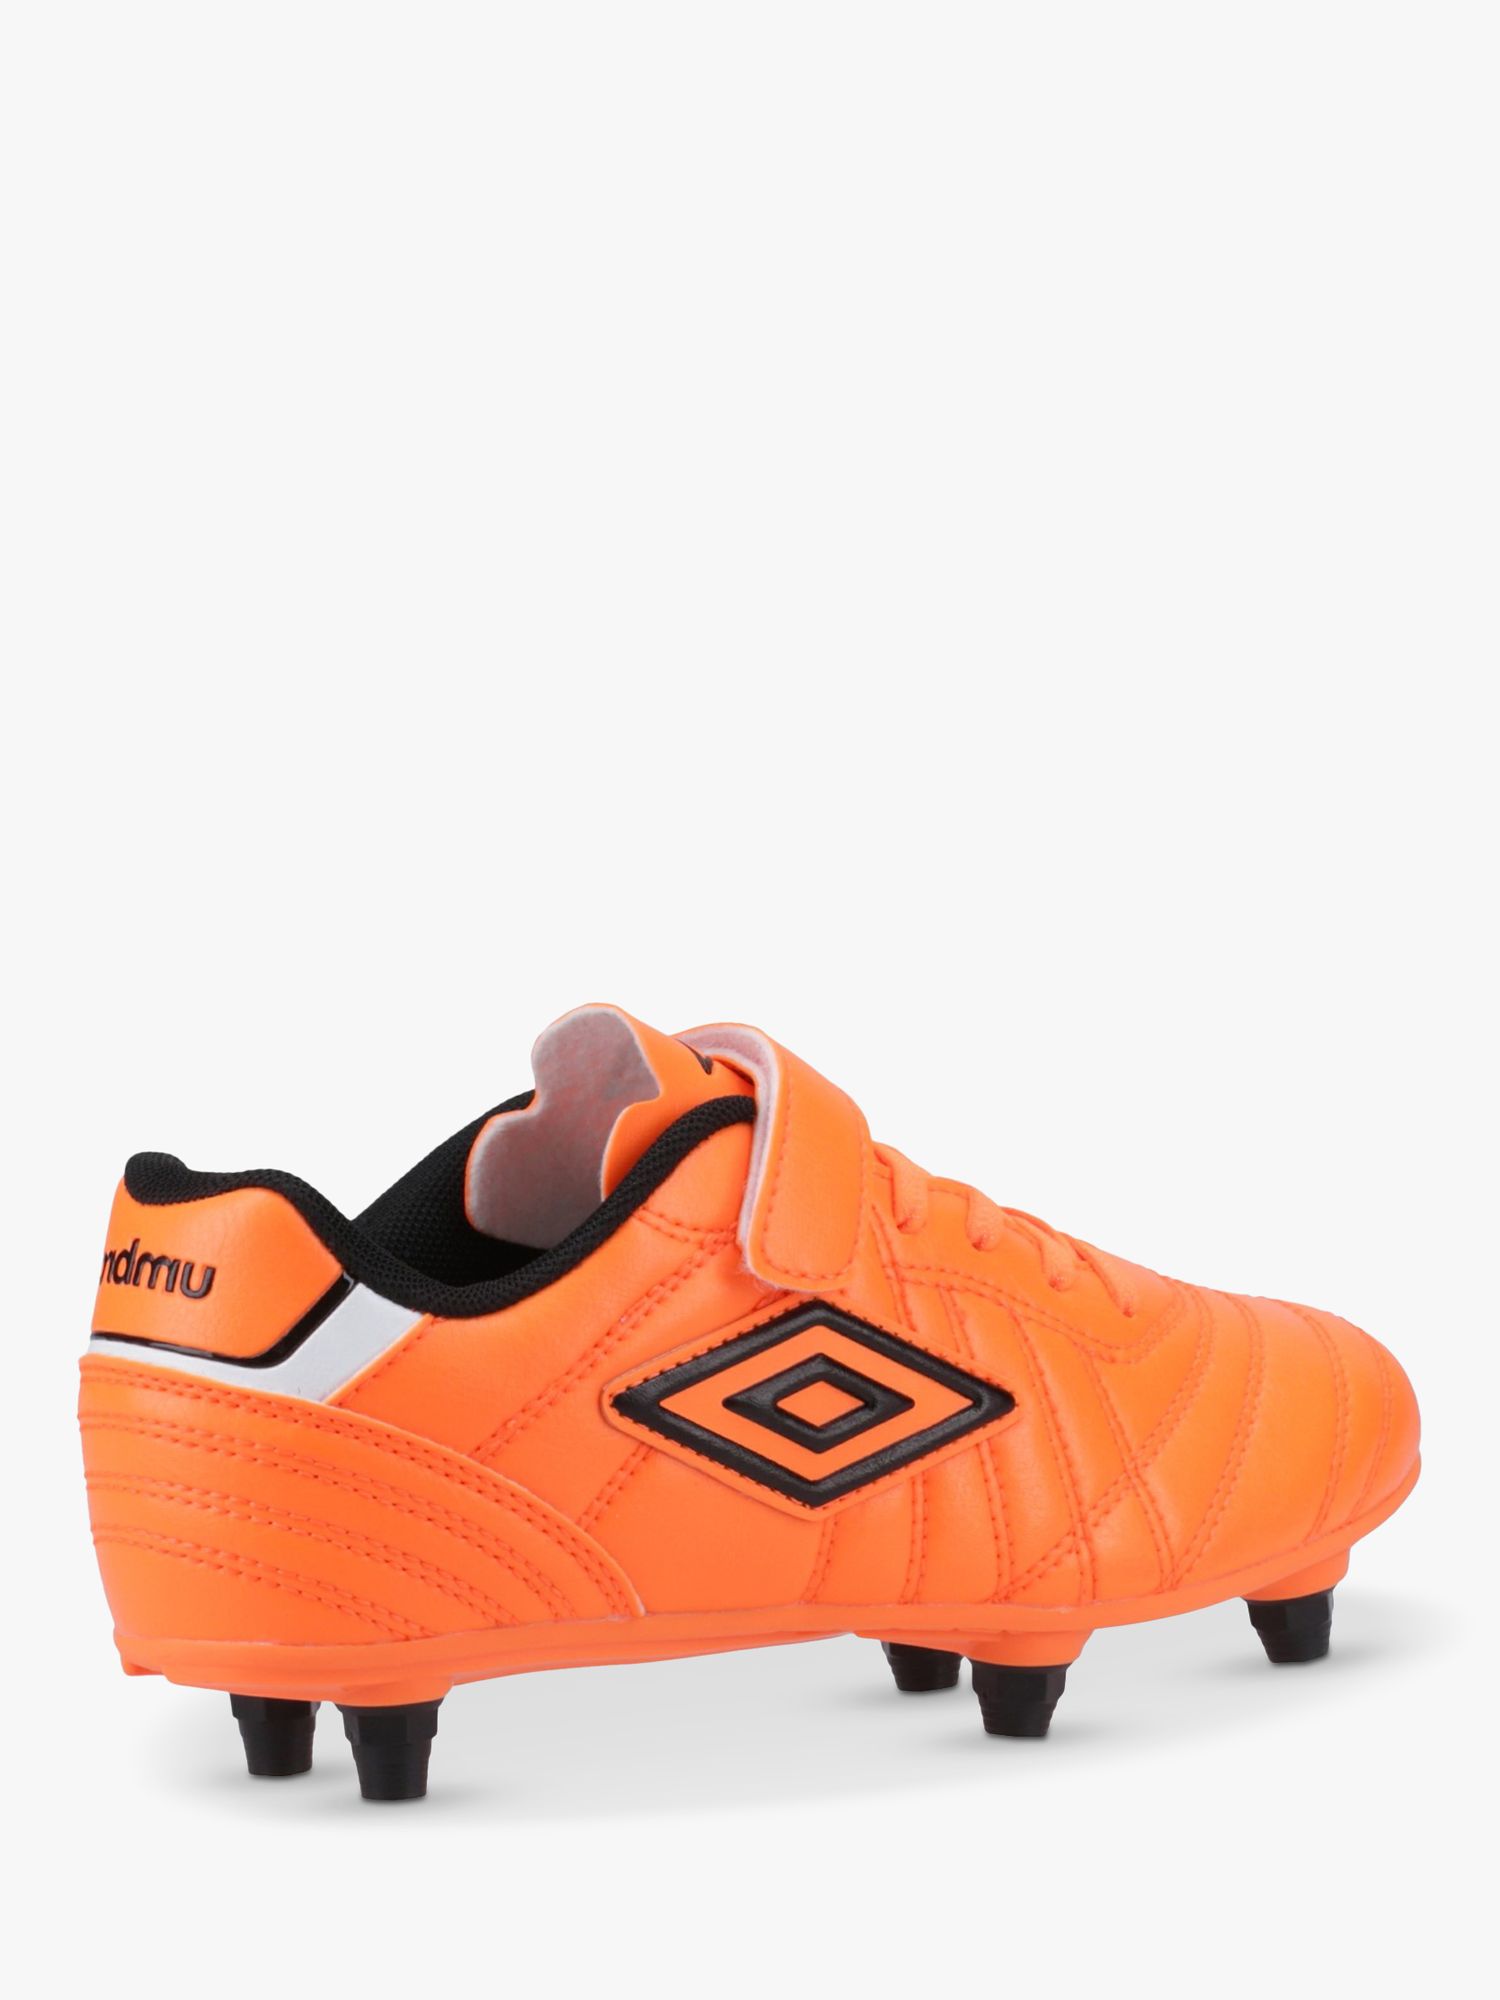 Umbro Kids' Speciali Liga Firm Ground Football Boots, Orange, 11 Jnr